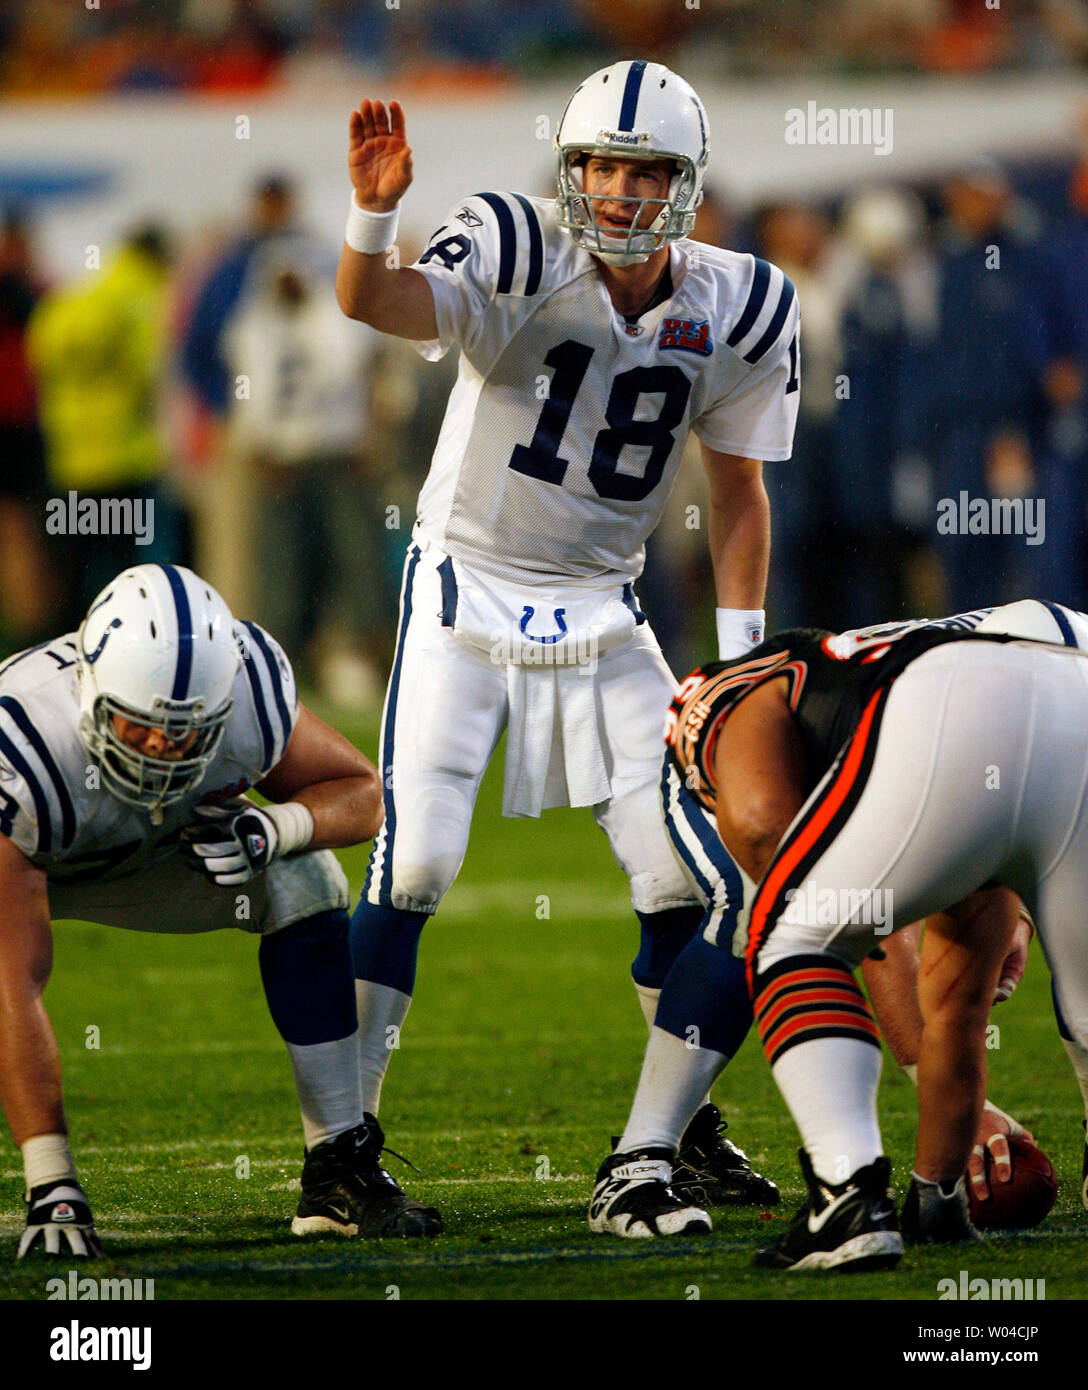 Peyton Manning Signed Super Bowl XLI Indianapolis Colts Game